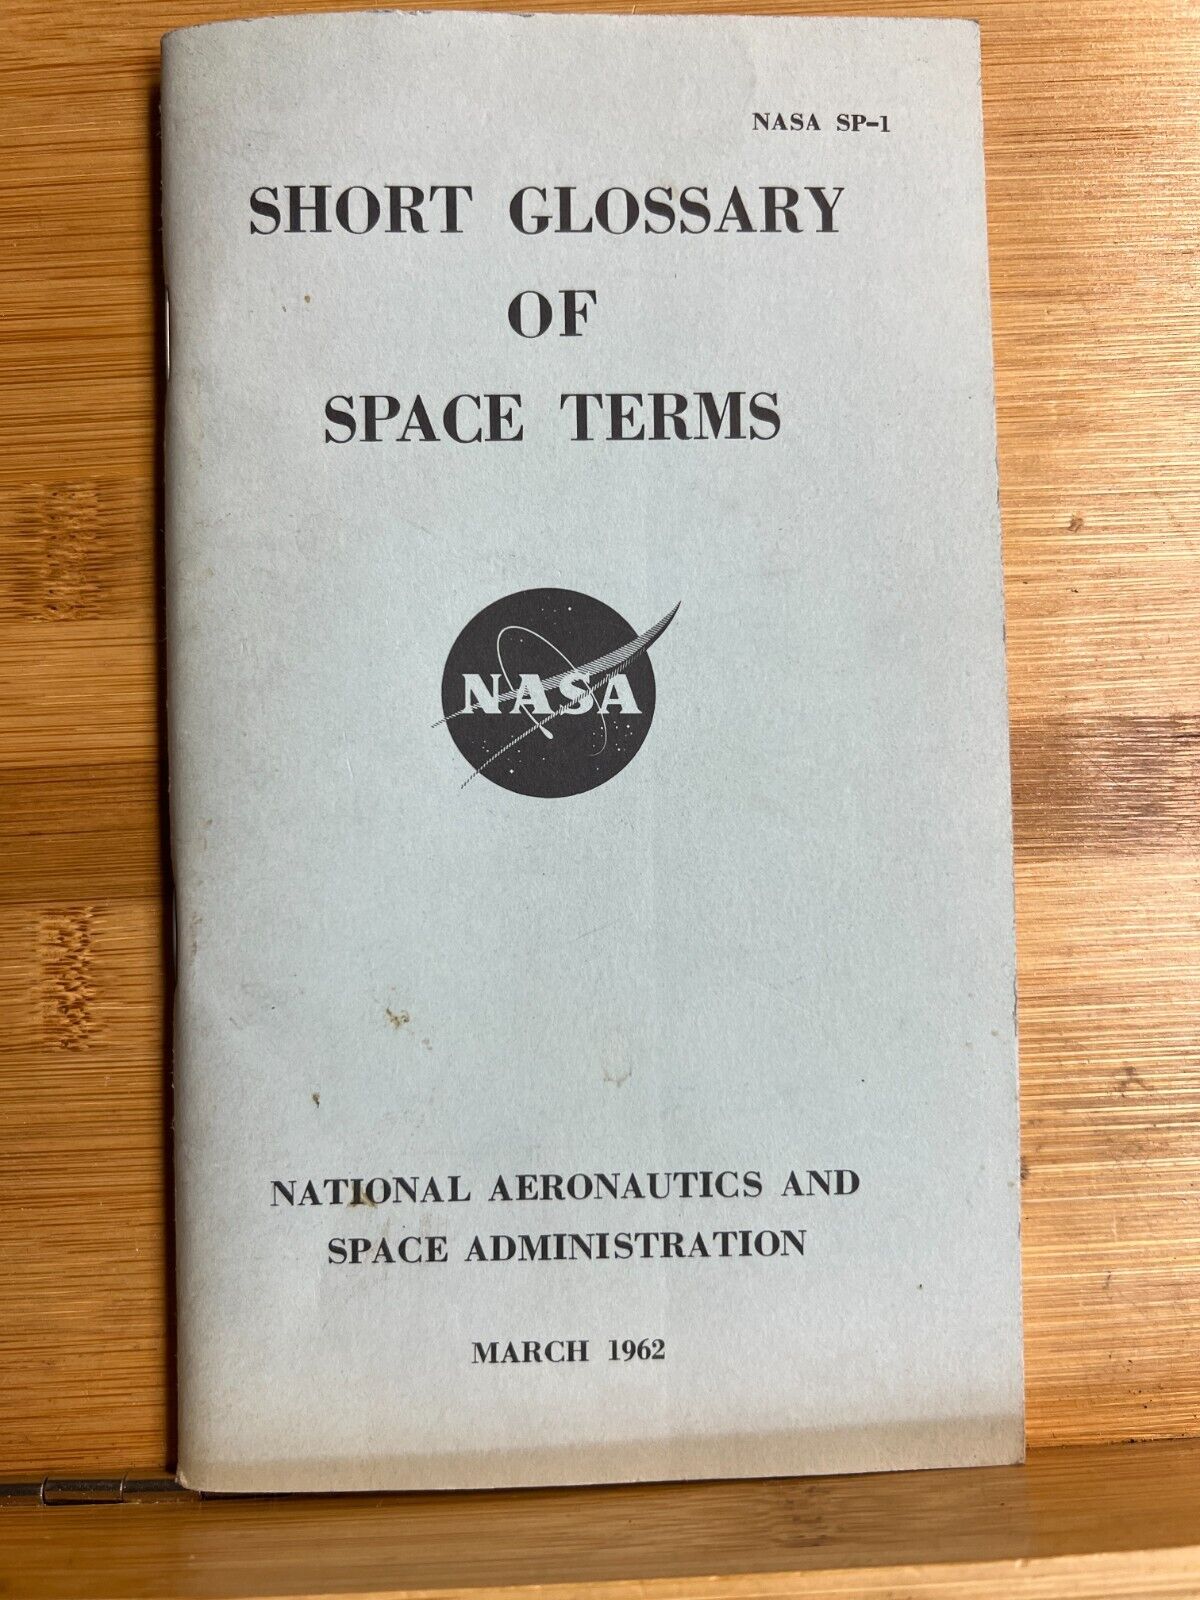 NASA Space Manual SHORT GLOSSARY OF SPACE TERMS - 1962 ORIGINAL PUBLICATION